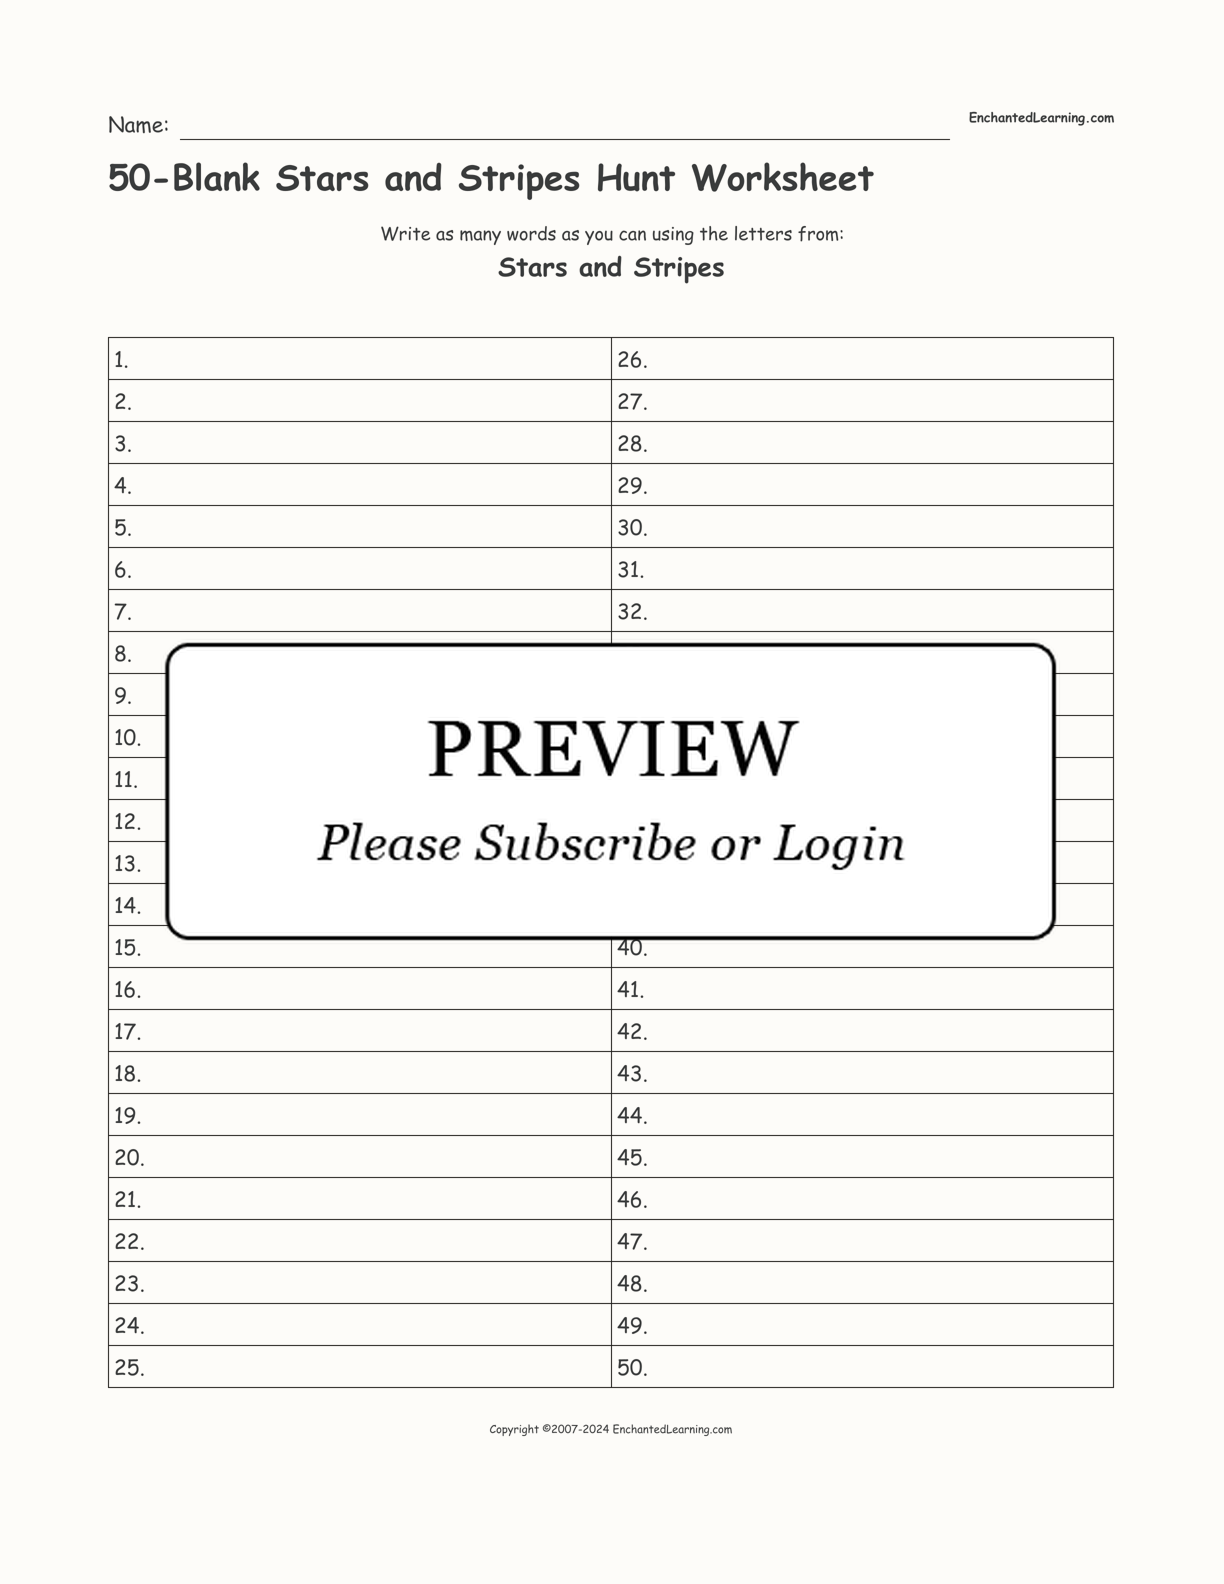 50-Blank Stars and Stripes Hunt Worksheet interactive worksheet page 1